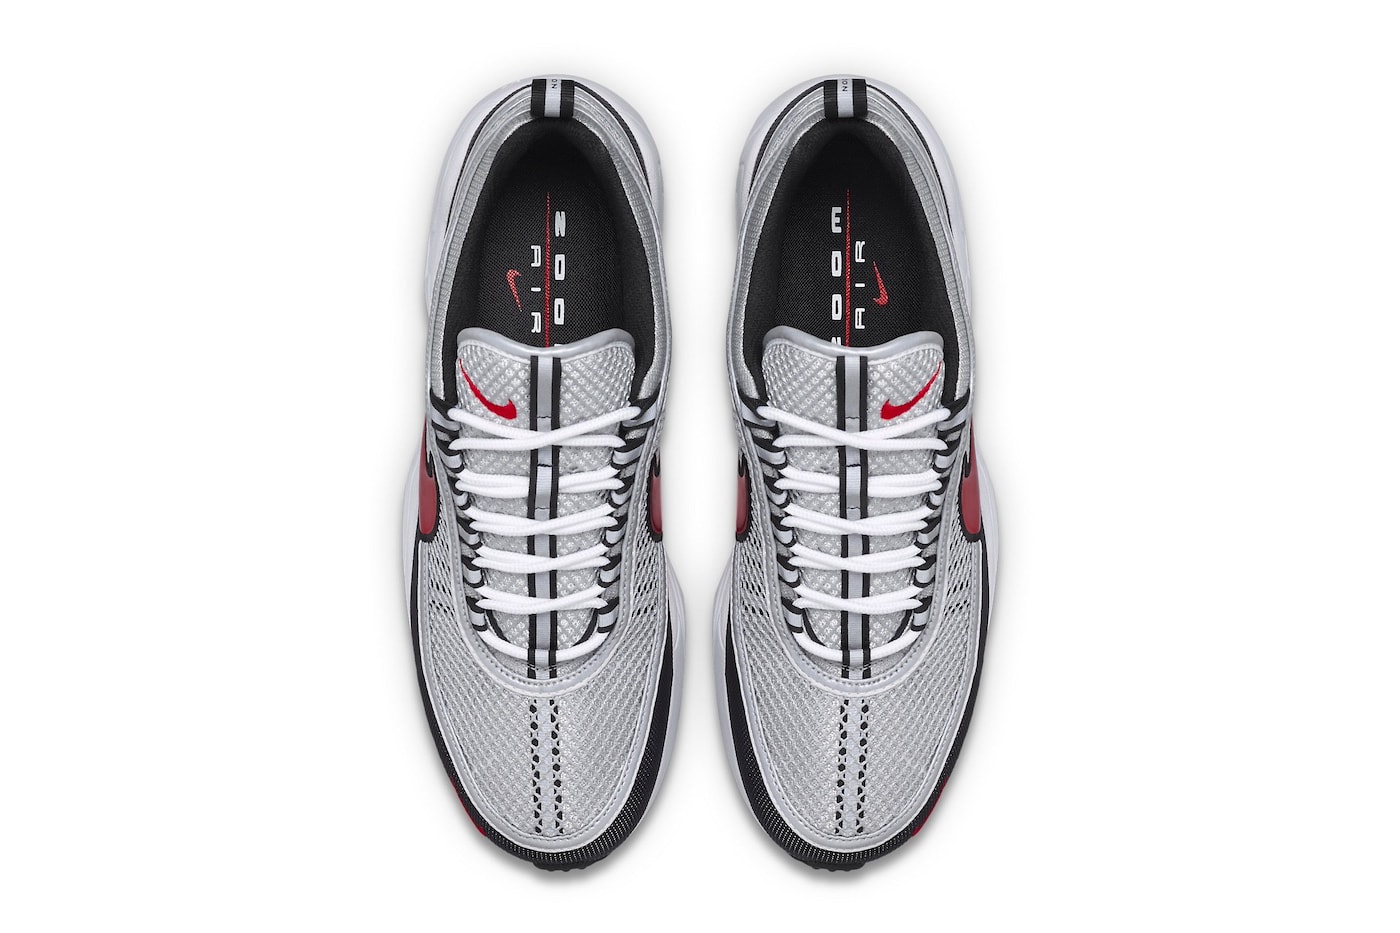 Nike Air Zoom Spiridon "Sport Red" To Return Later This Year holiday season metallic black swoosh retro silver shoes wolf grey 